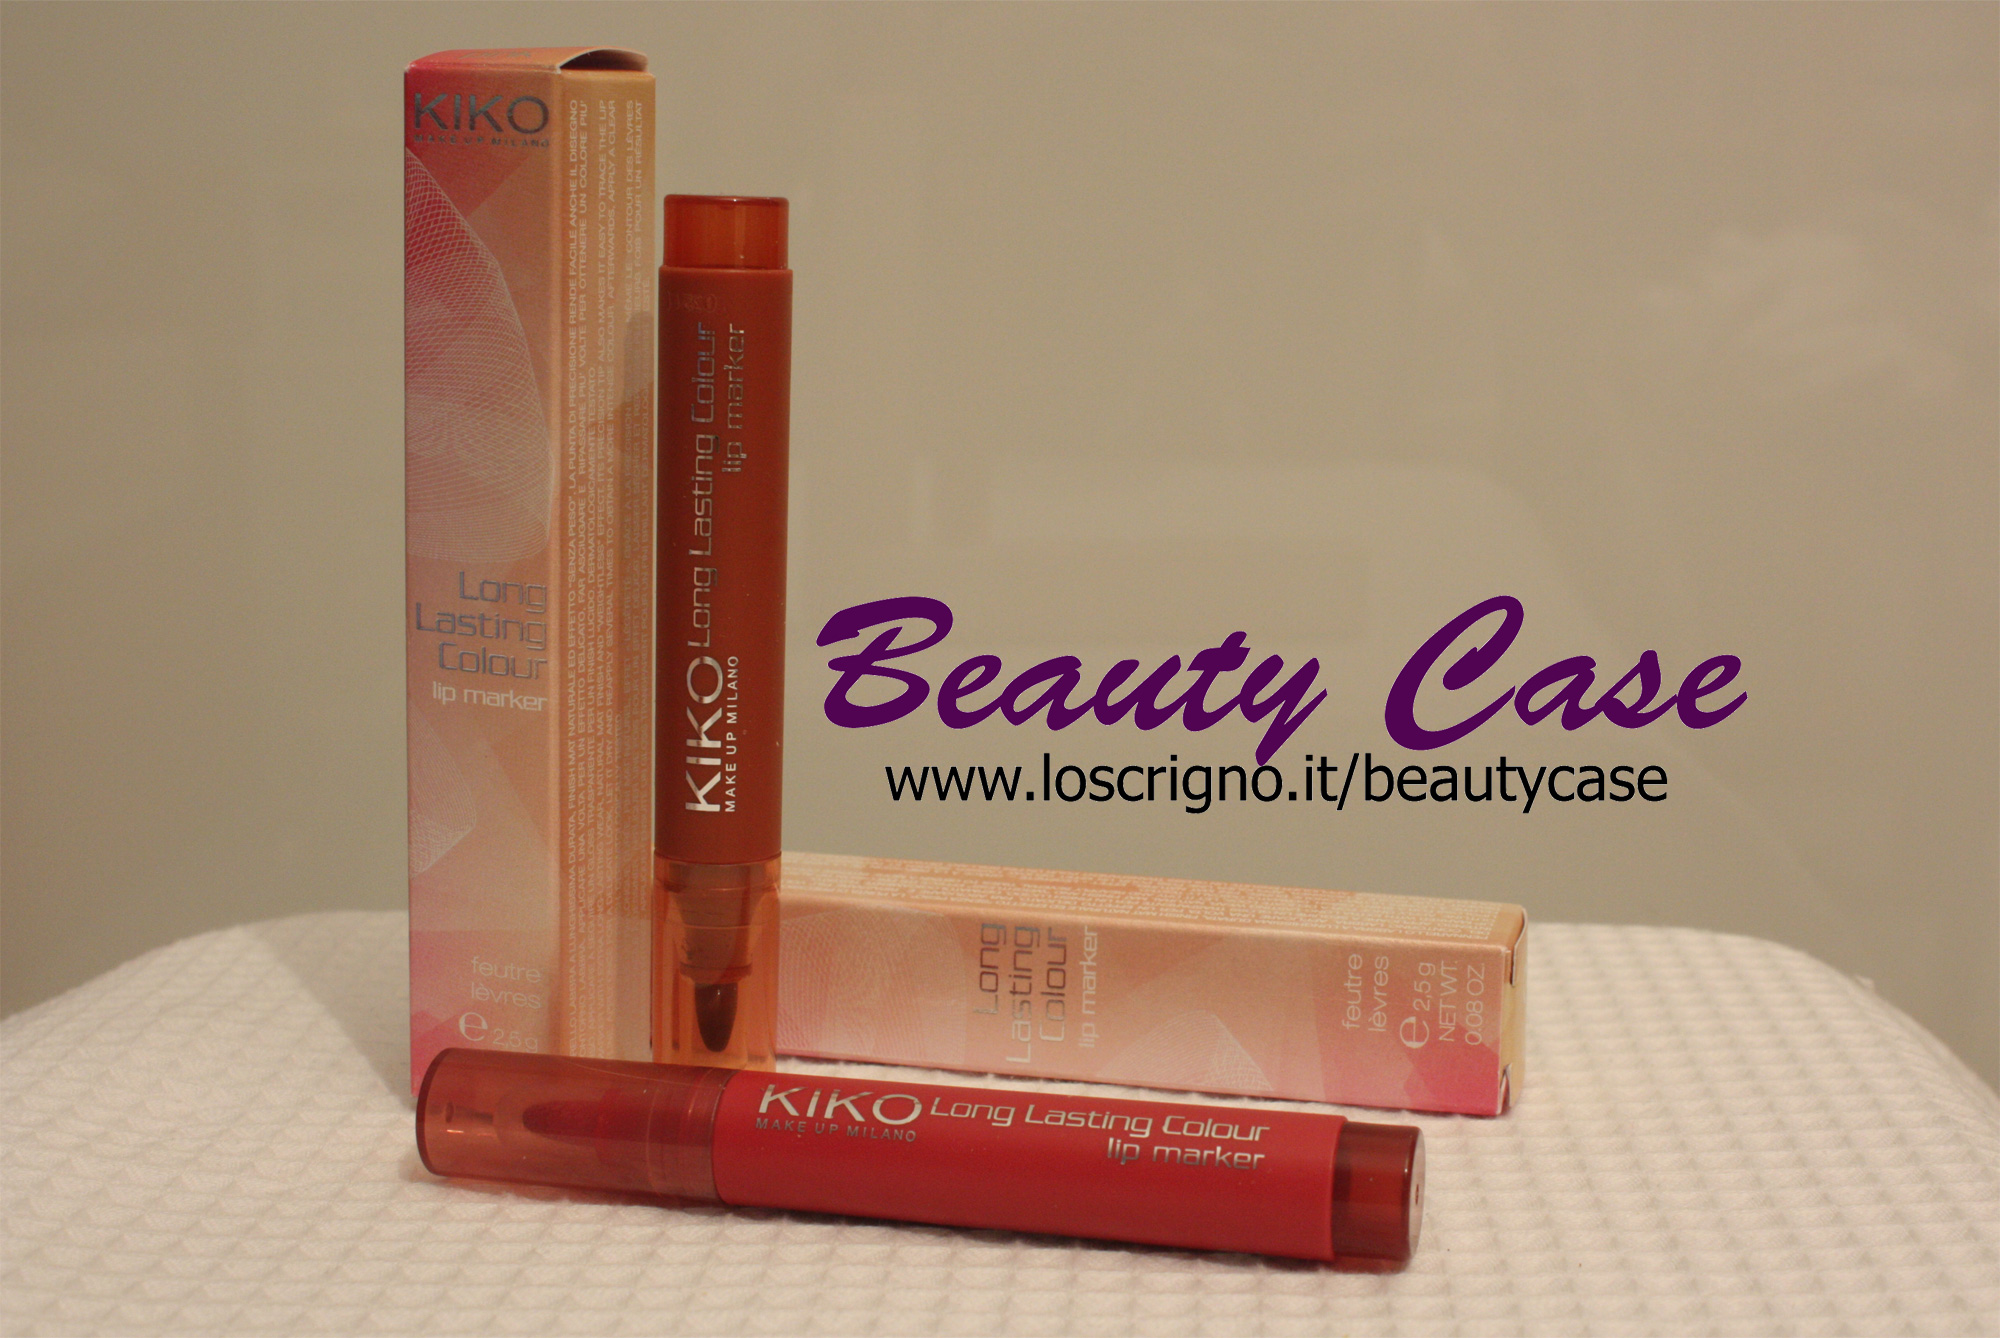 Kiko - Long Lasting Colour Lip Marker (Kaleidoscopic Optical Look) - Beauty  Case Blog - Beauty blog italiano su make-up e bellezza